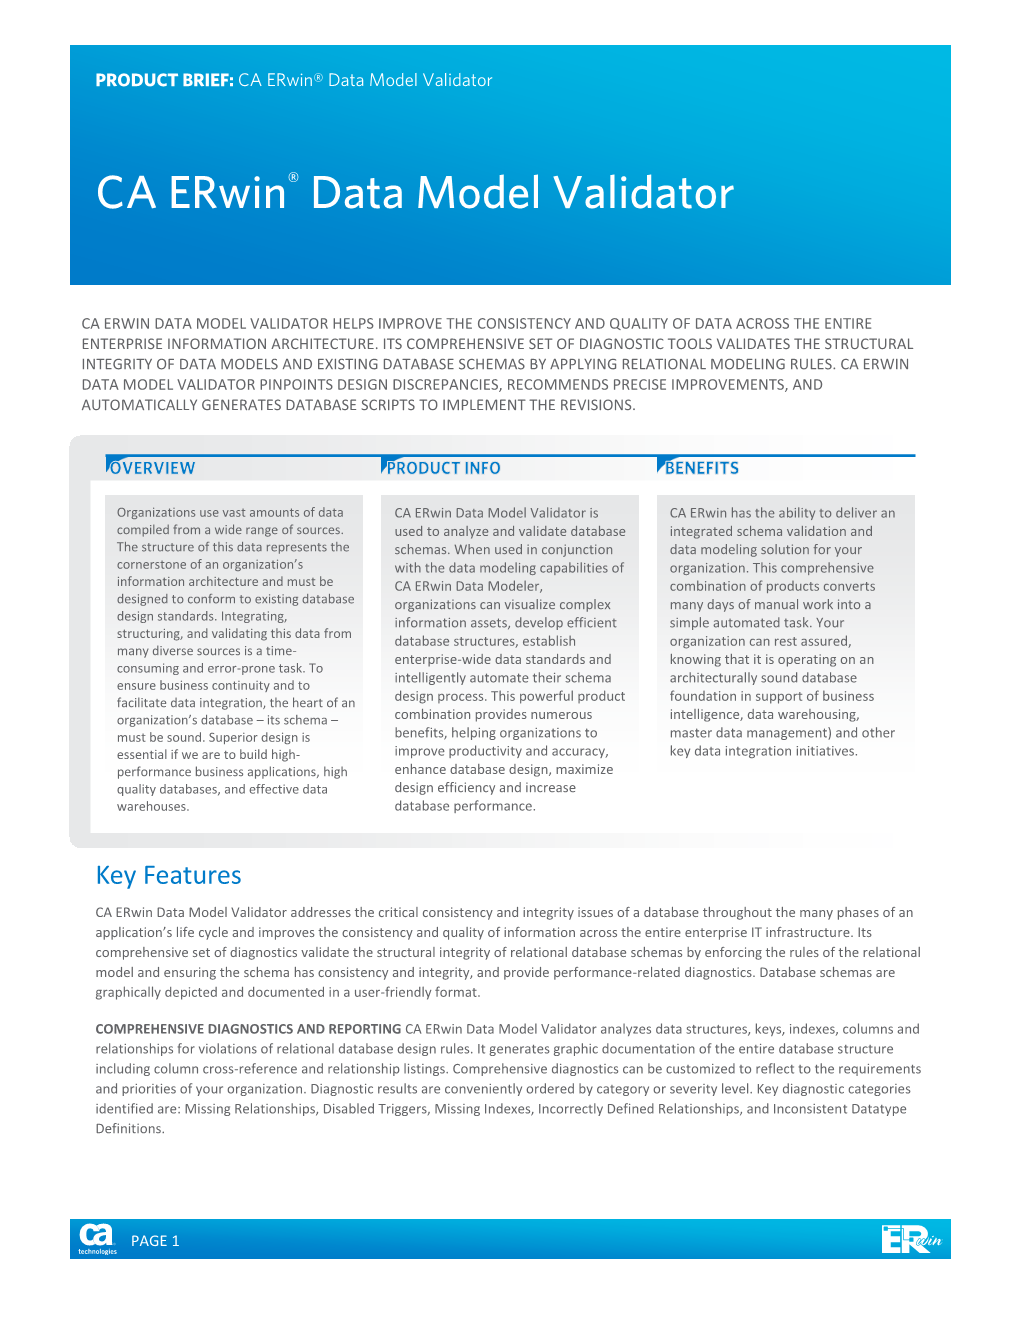 CA Erwin® Data Model Validator